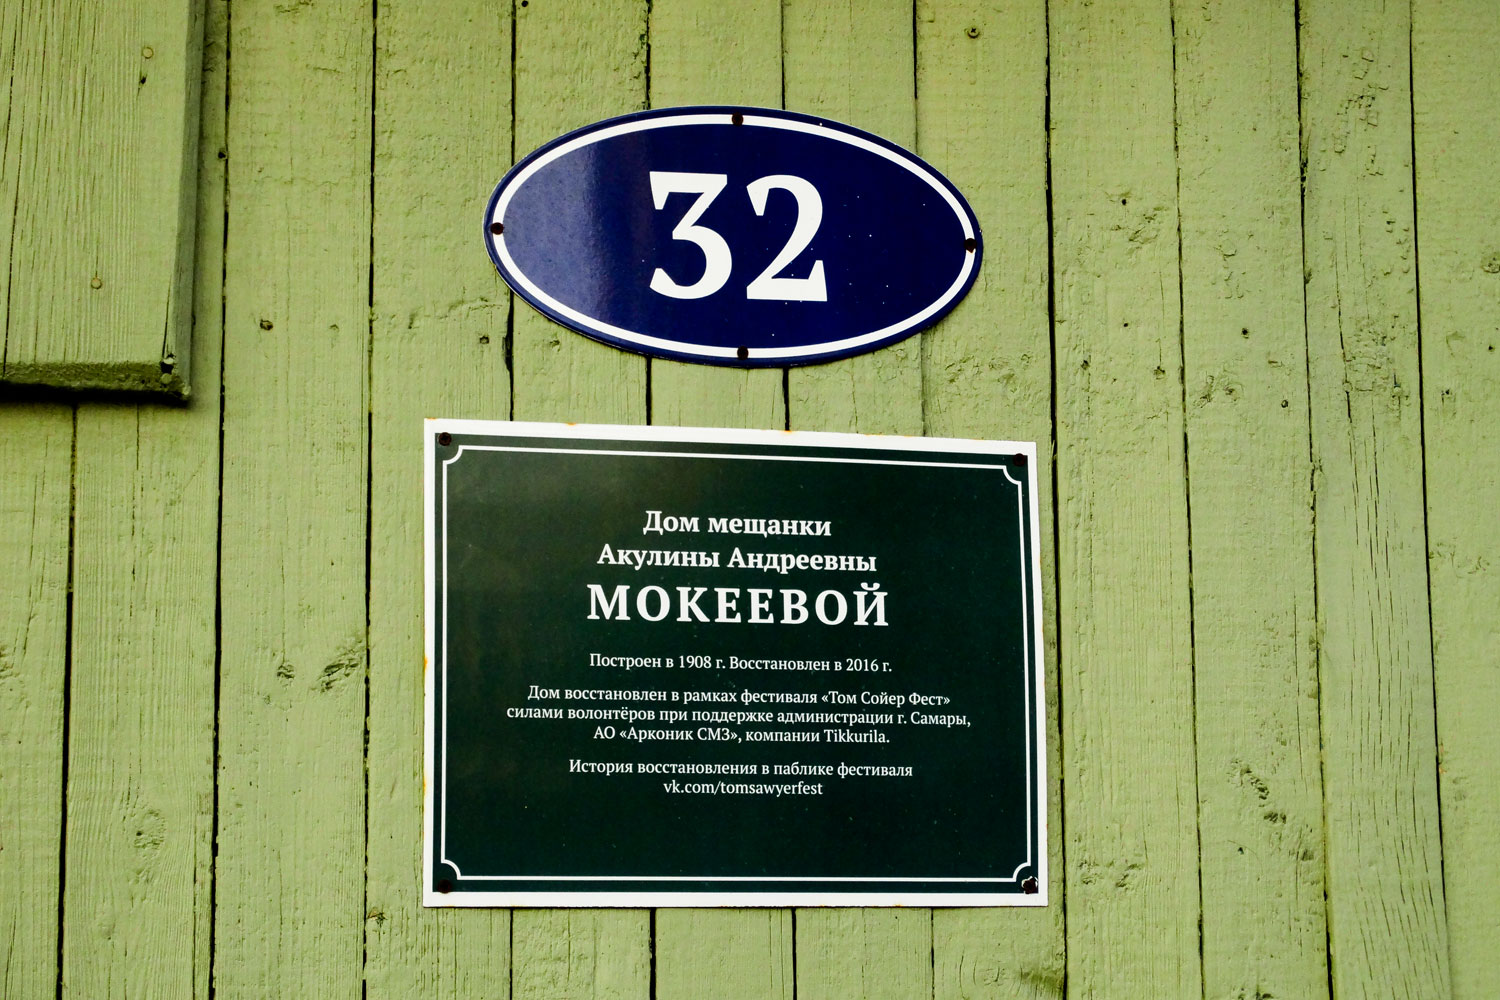 Samara, Улица Льва Толстого, 32. Samara — Memorial plaques